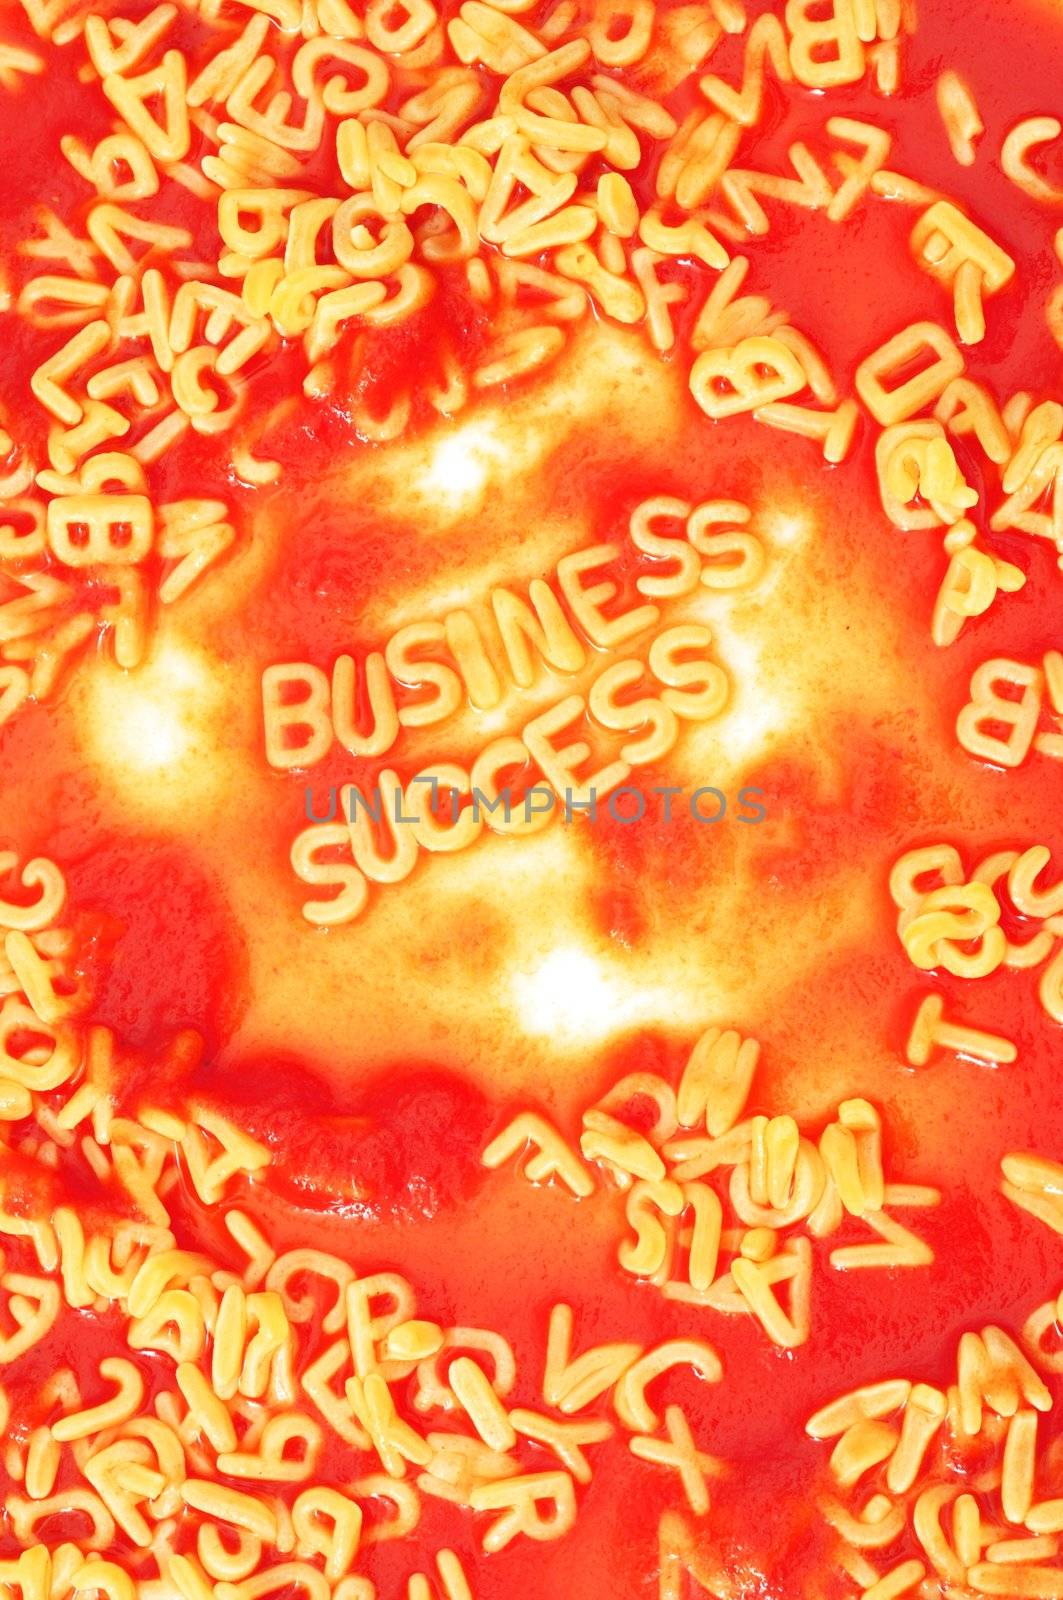 business success by gunnar3000